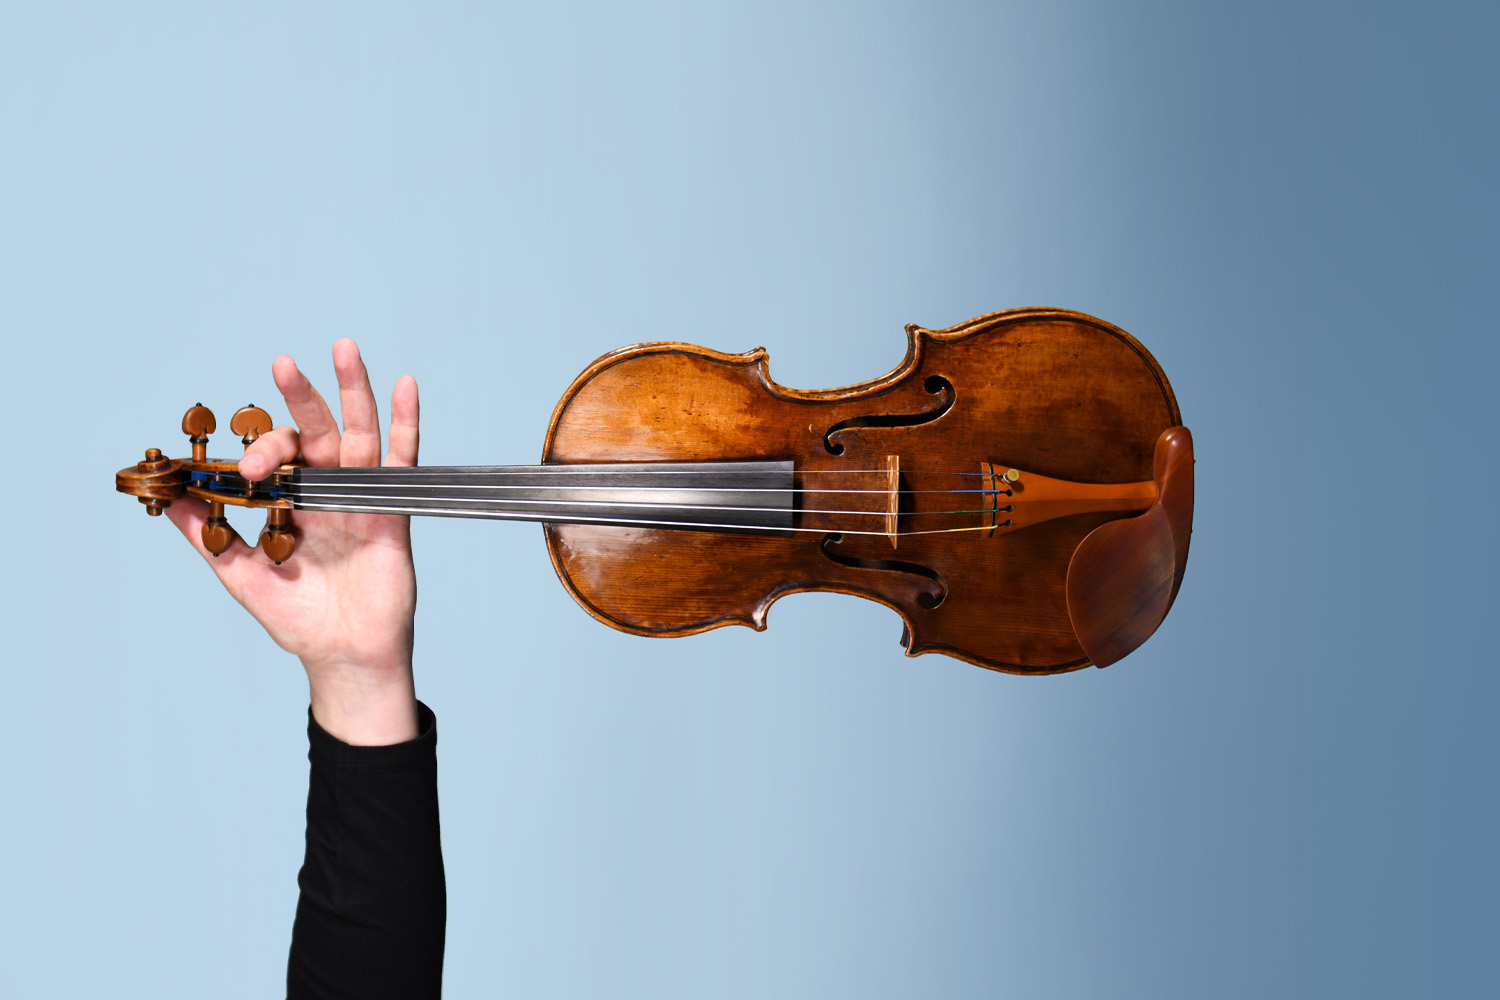 Hand holding violin. Photo by Giulia McGauran.